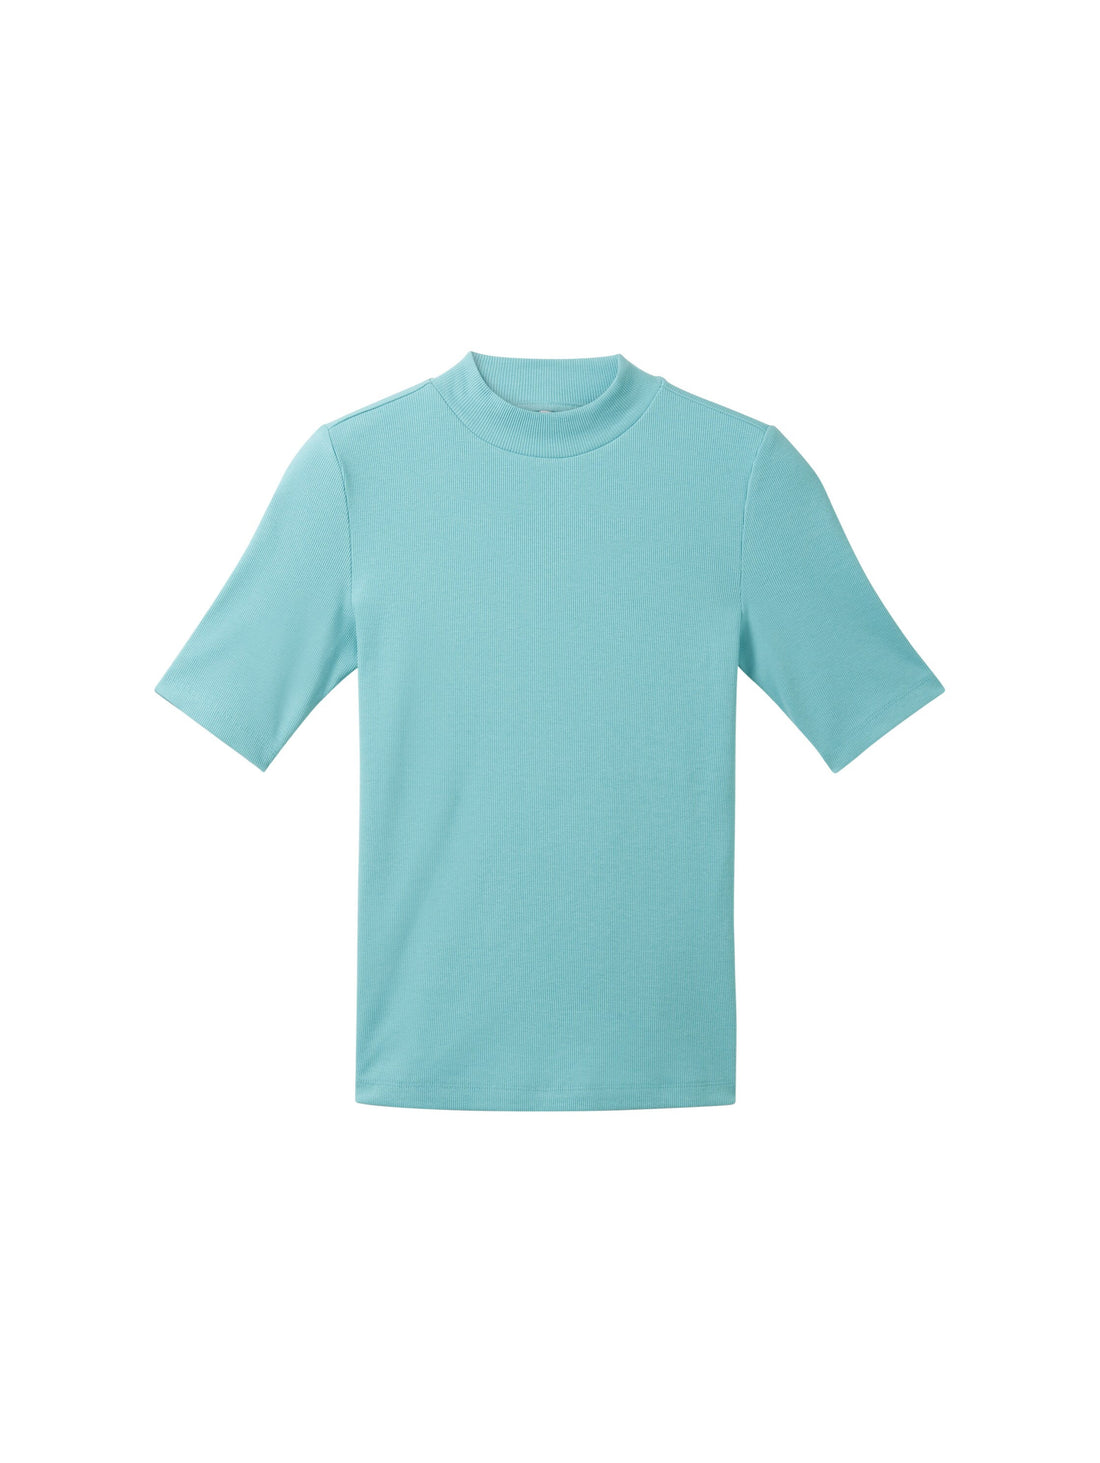 Short Sleeve Scuba Style T Shirt_1038064_10426_01